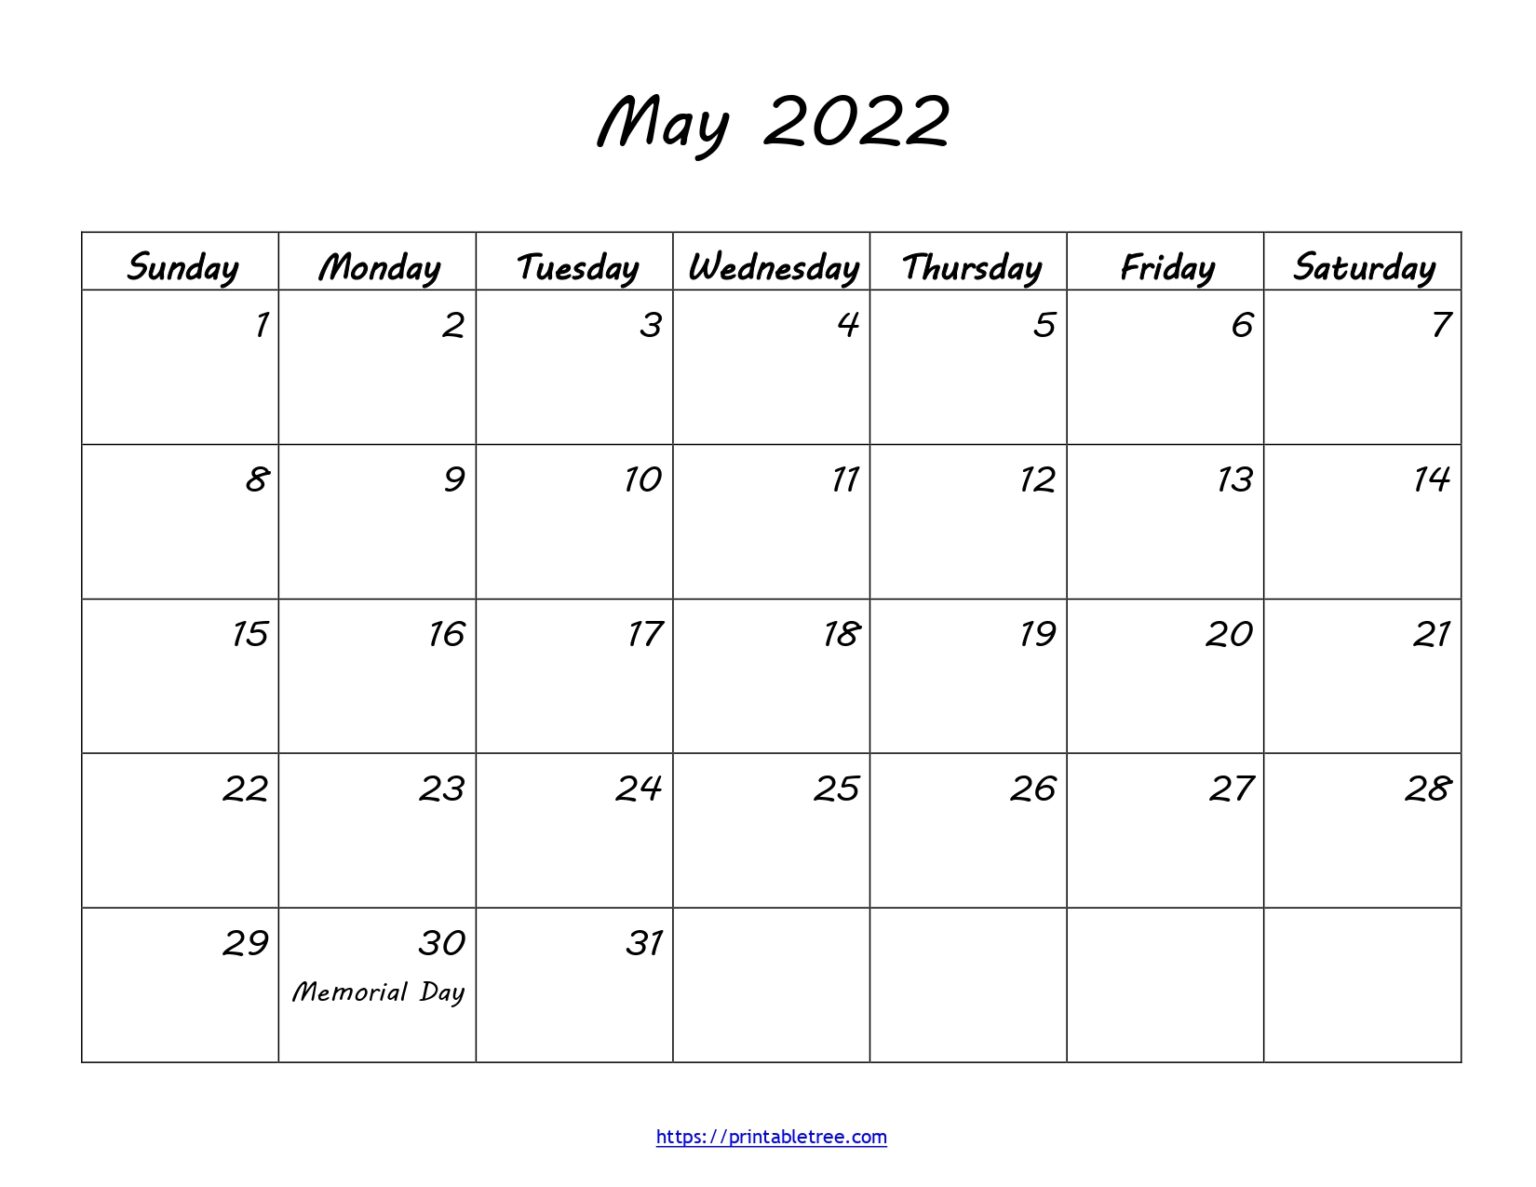 Free Blank Printable Calendar December 2022